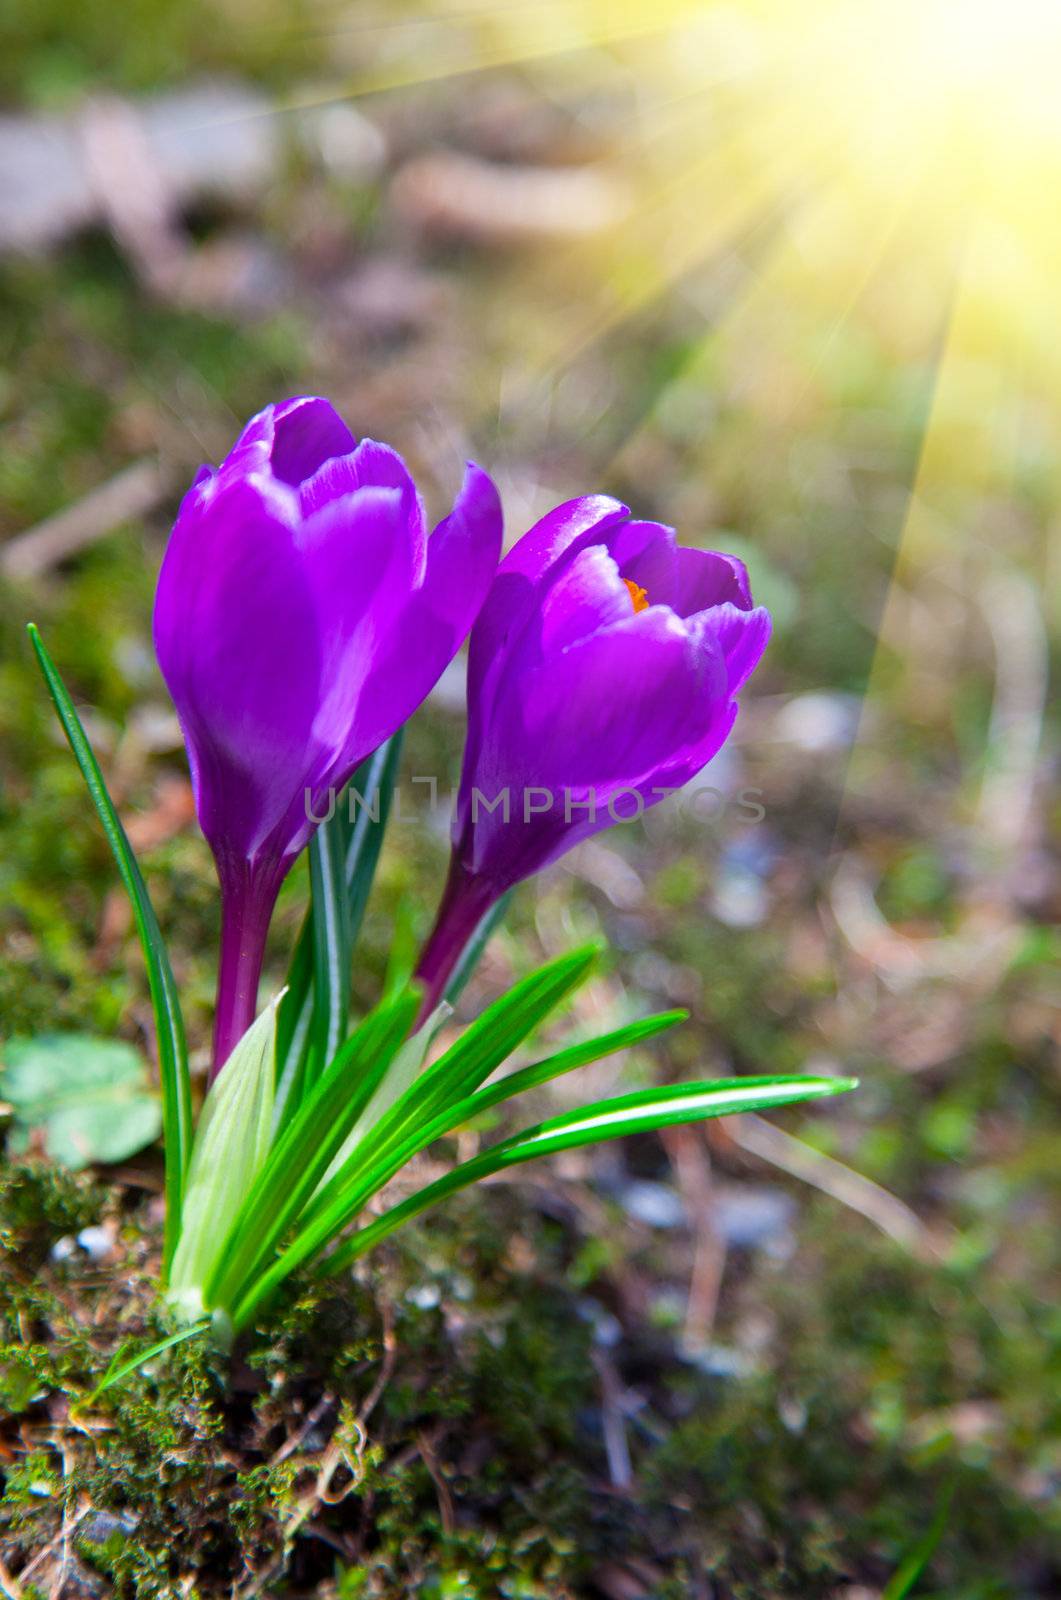 Spring purple crocus flowers